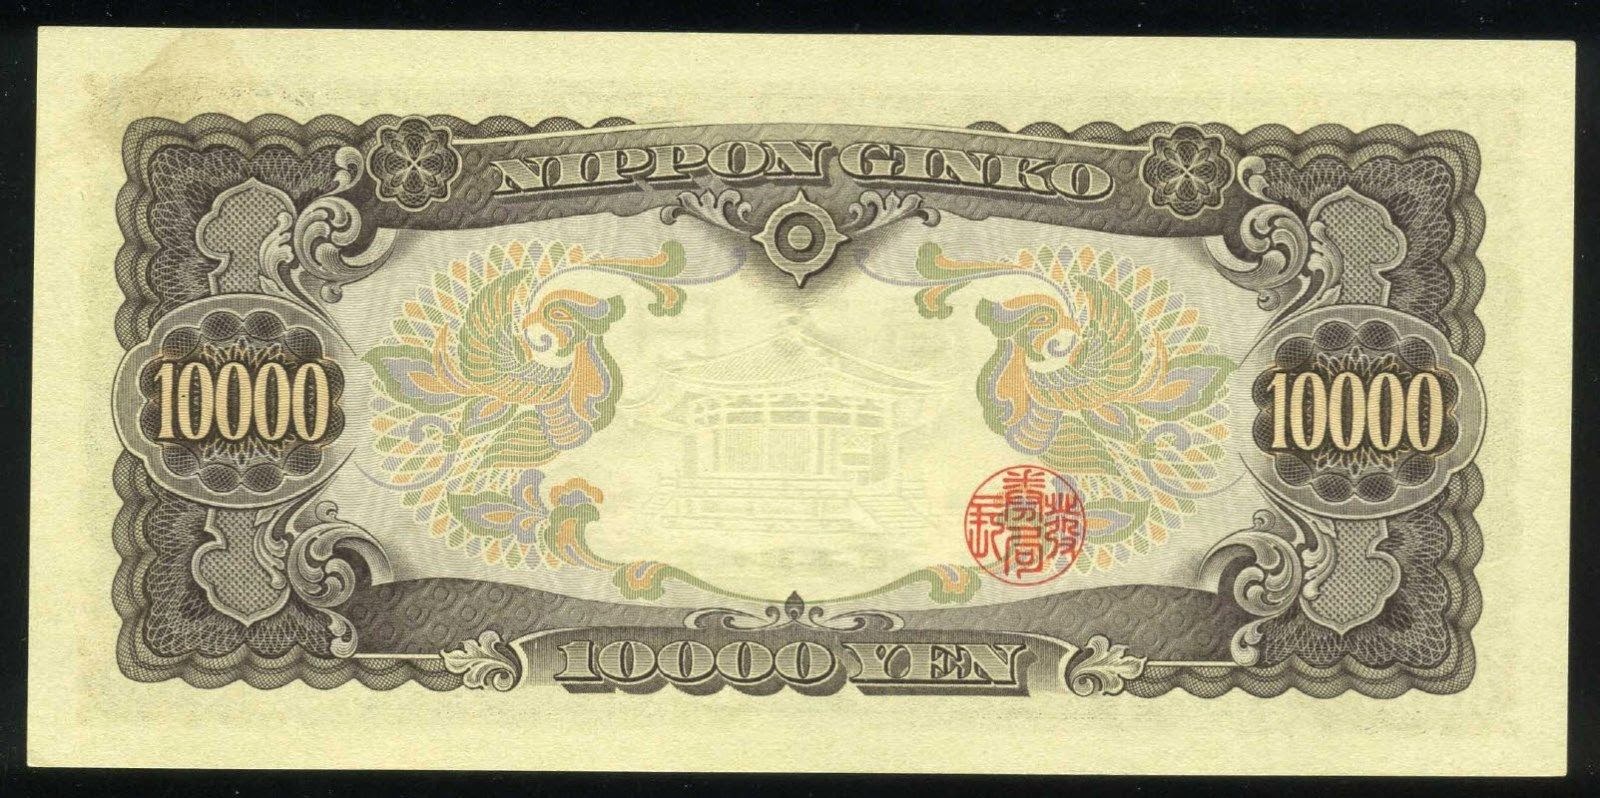 Japan Banknotes 10000 Japanese Yen note 1958 Phoenix